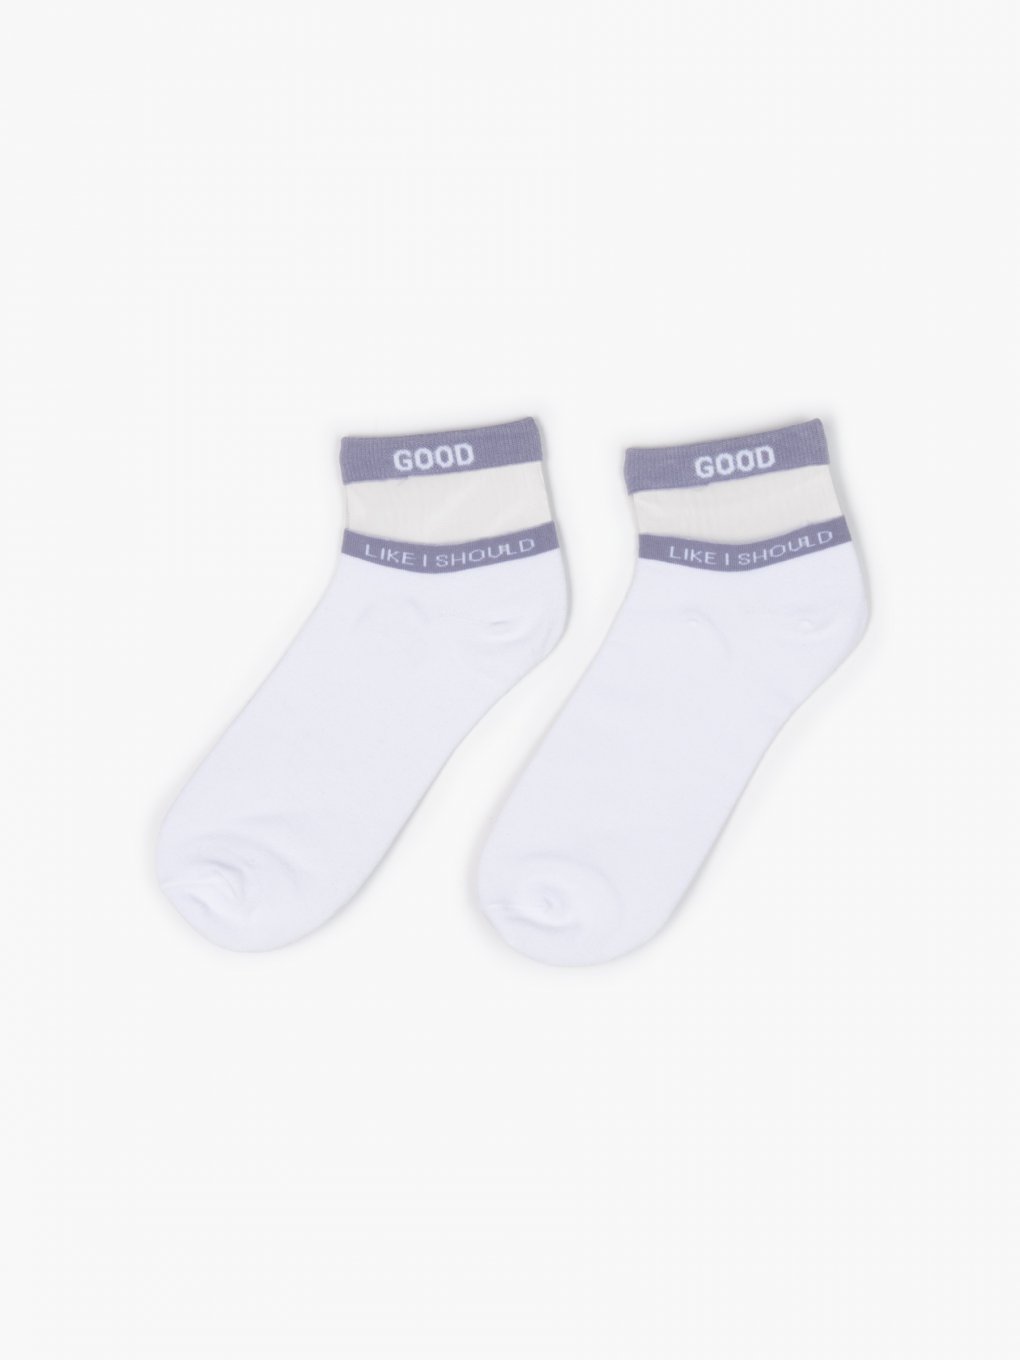 Socks with stripes